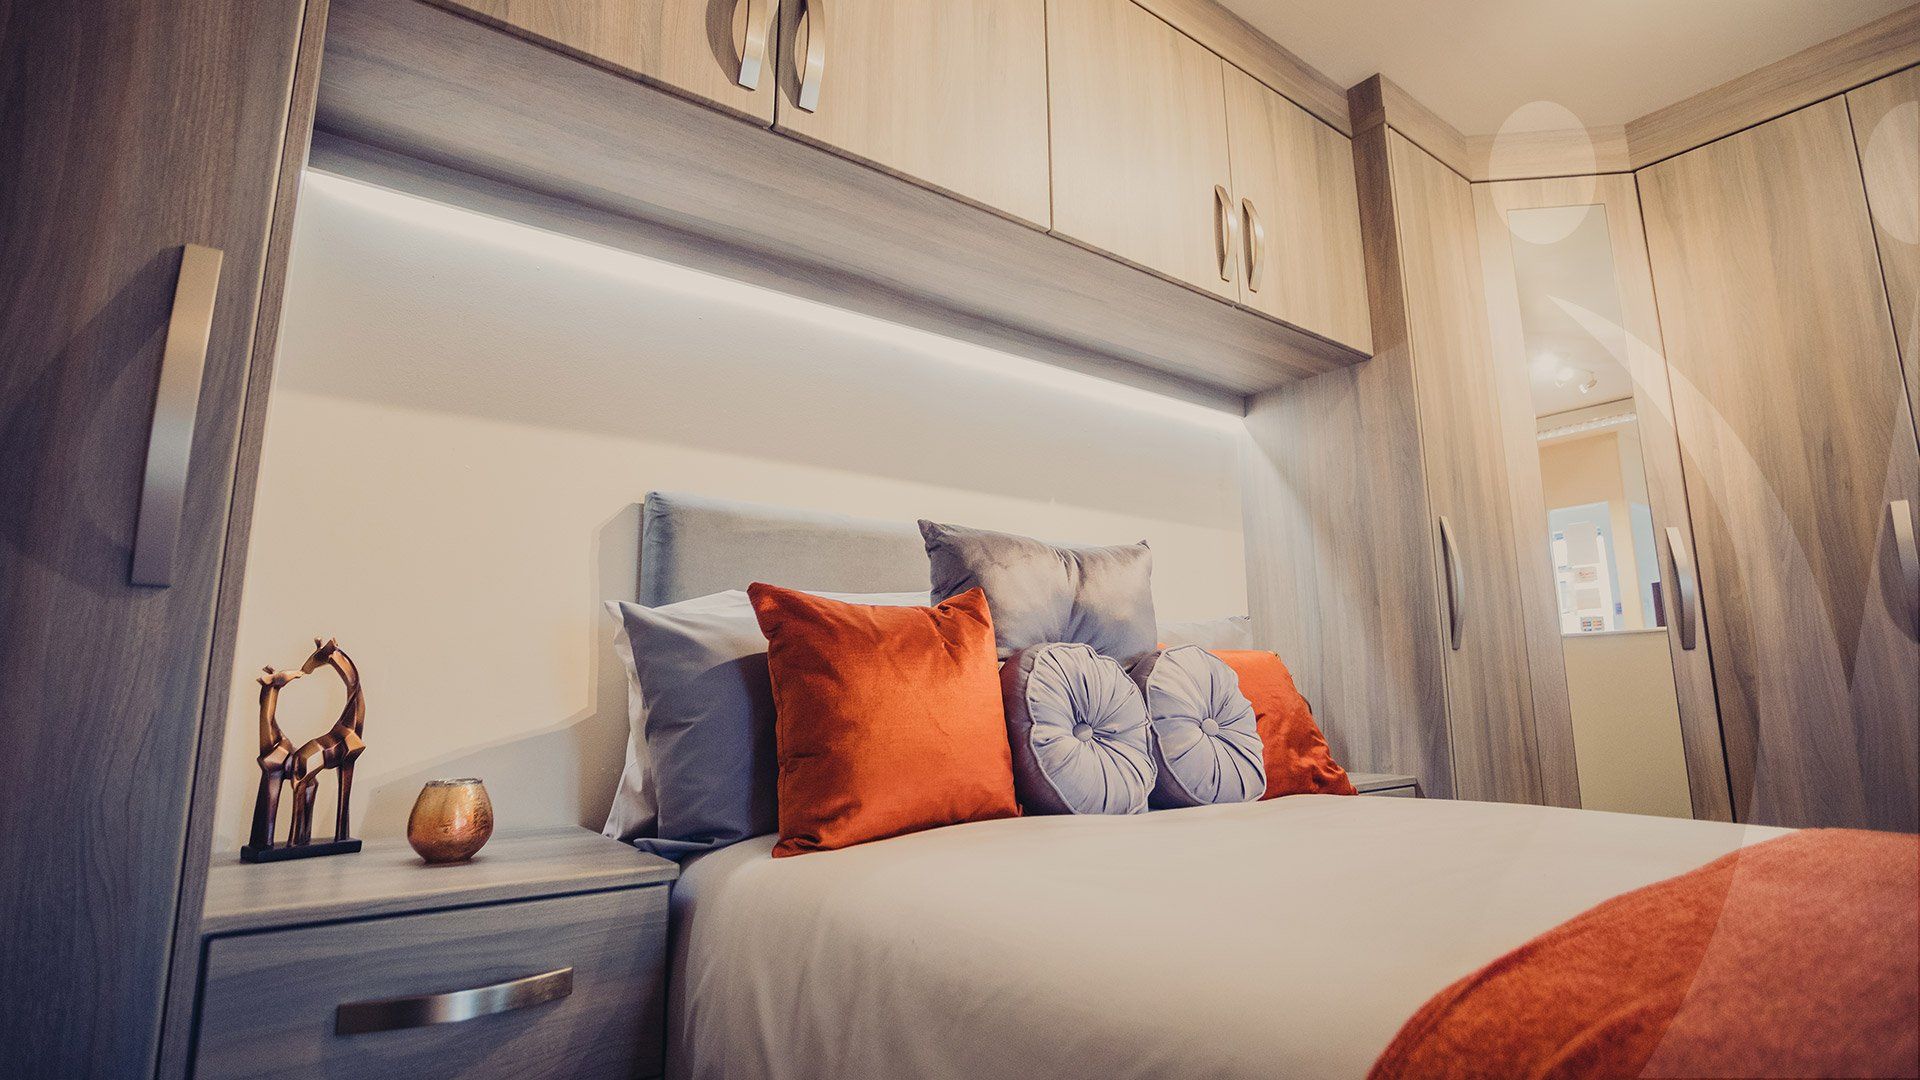 Crown Bedrooms bespoke fitted bedroom furniture